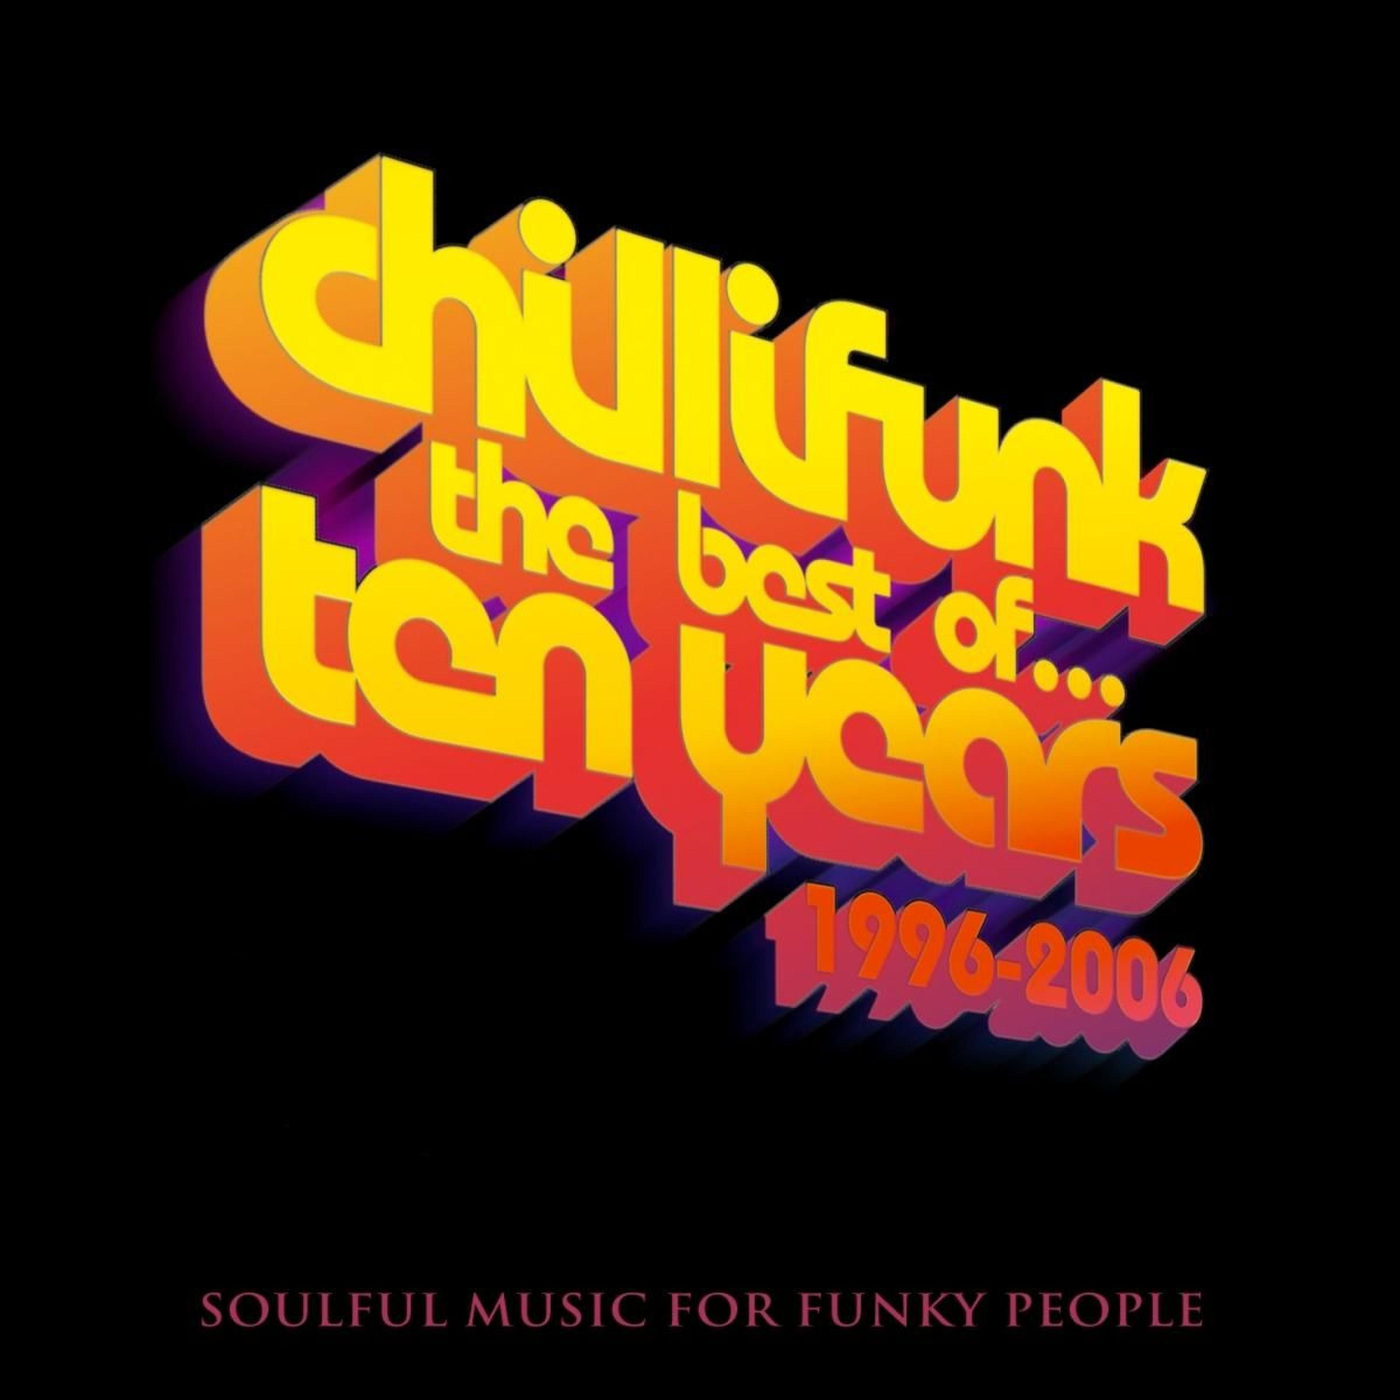 VA - The Best of Chillifunk Ten Years 1996-2006 (Pt. Two) / Chillifunk